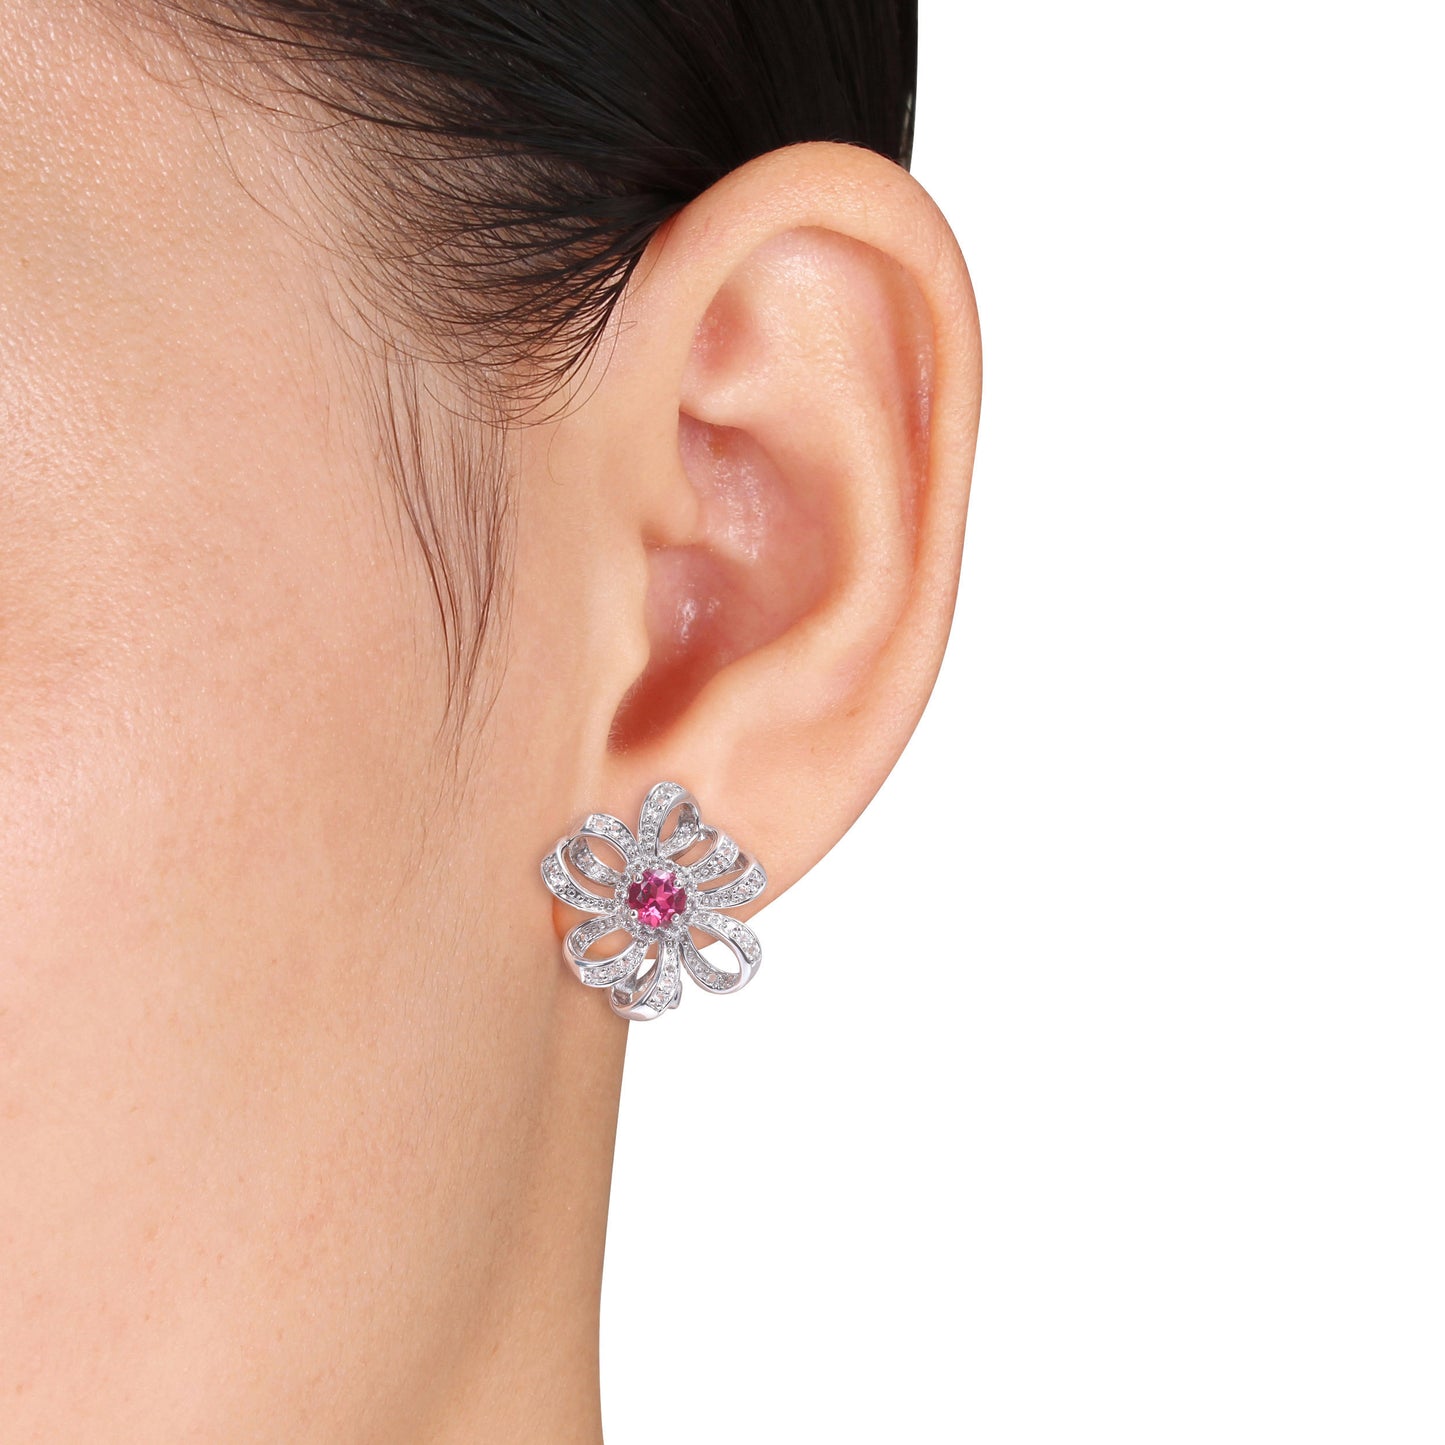 2ct Pink & White Topaz Earrings in Sterling Silver